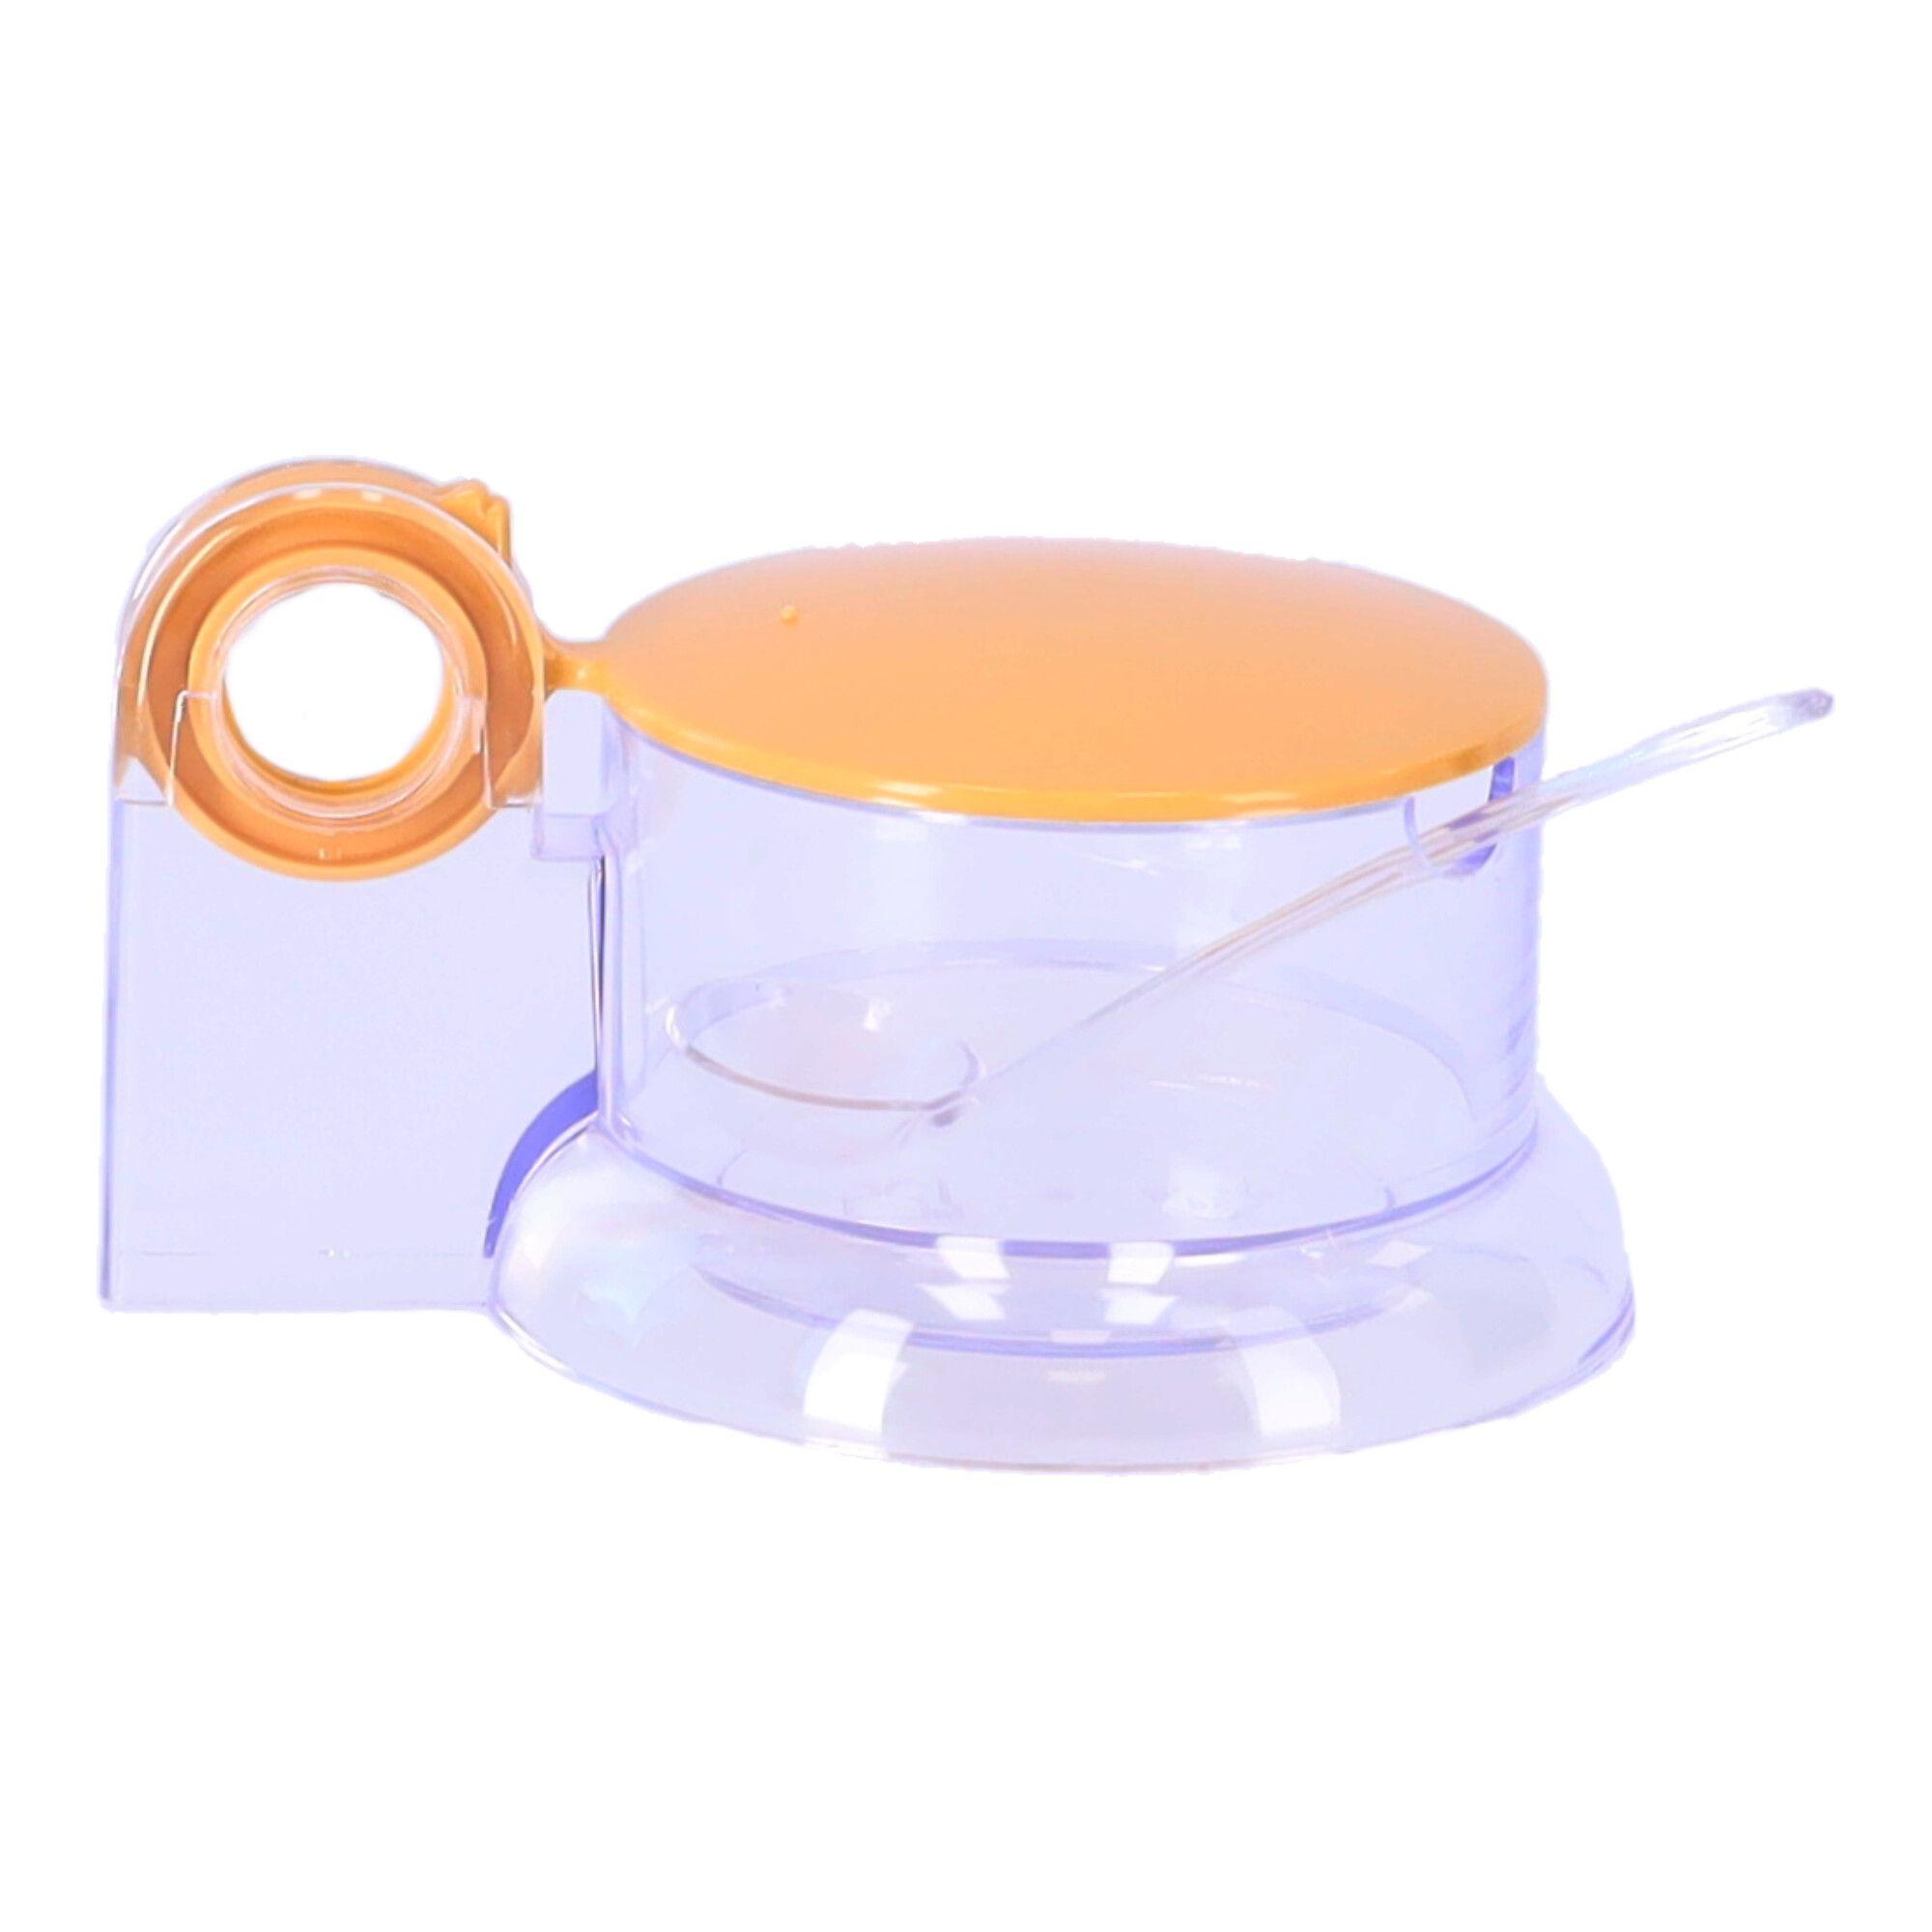 Plastic sugar bowl with a spoon 150 ml, POLISH PRODUCT